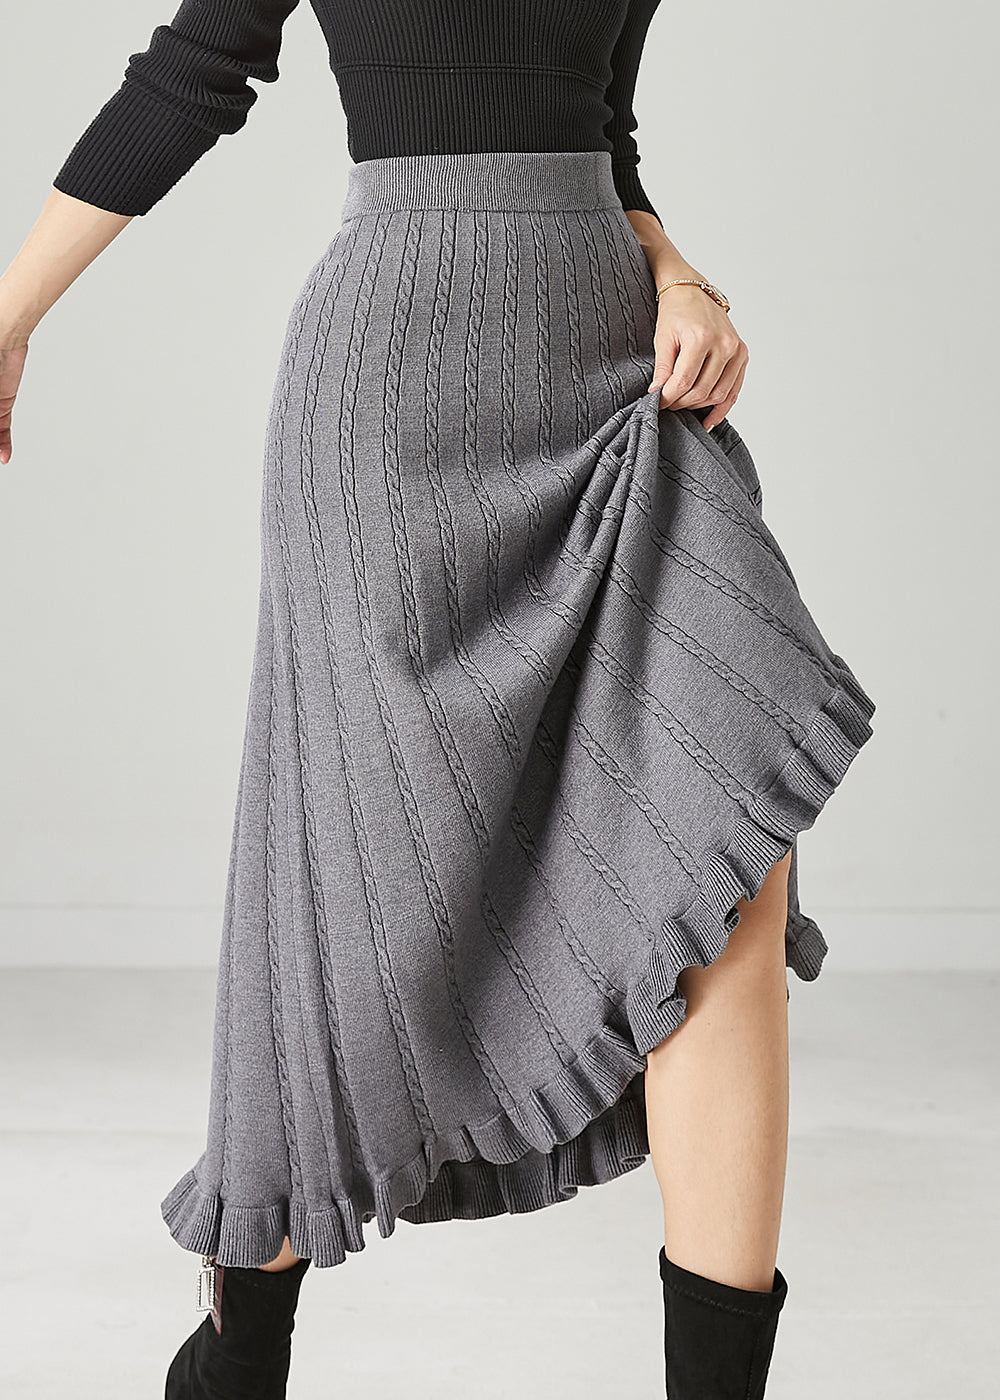 Casual Grey Ruffled Exra Large Hem Knit Skirts Spring YU1045